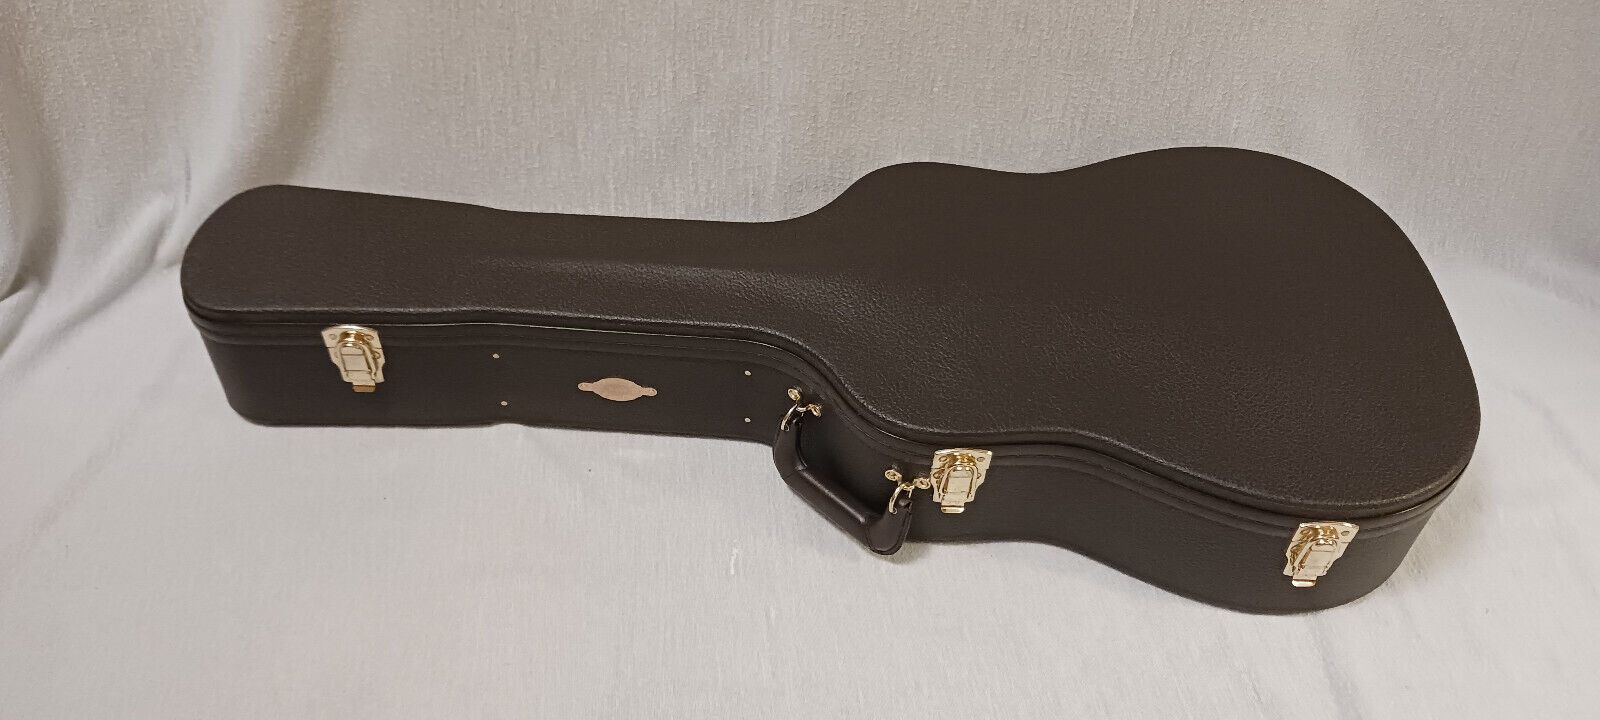 Taylor 320 Dreadnought Acoustic Guitar-Edgeburst 22